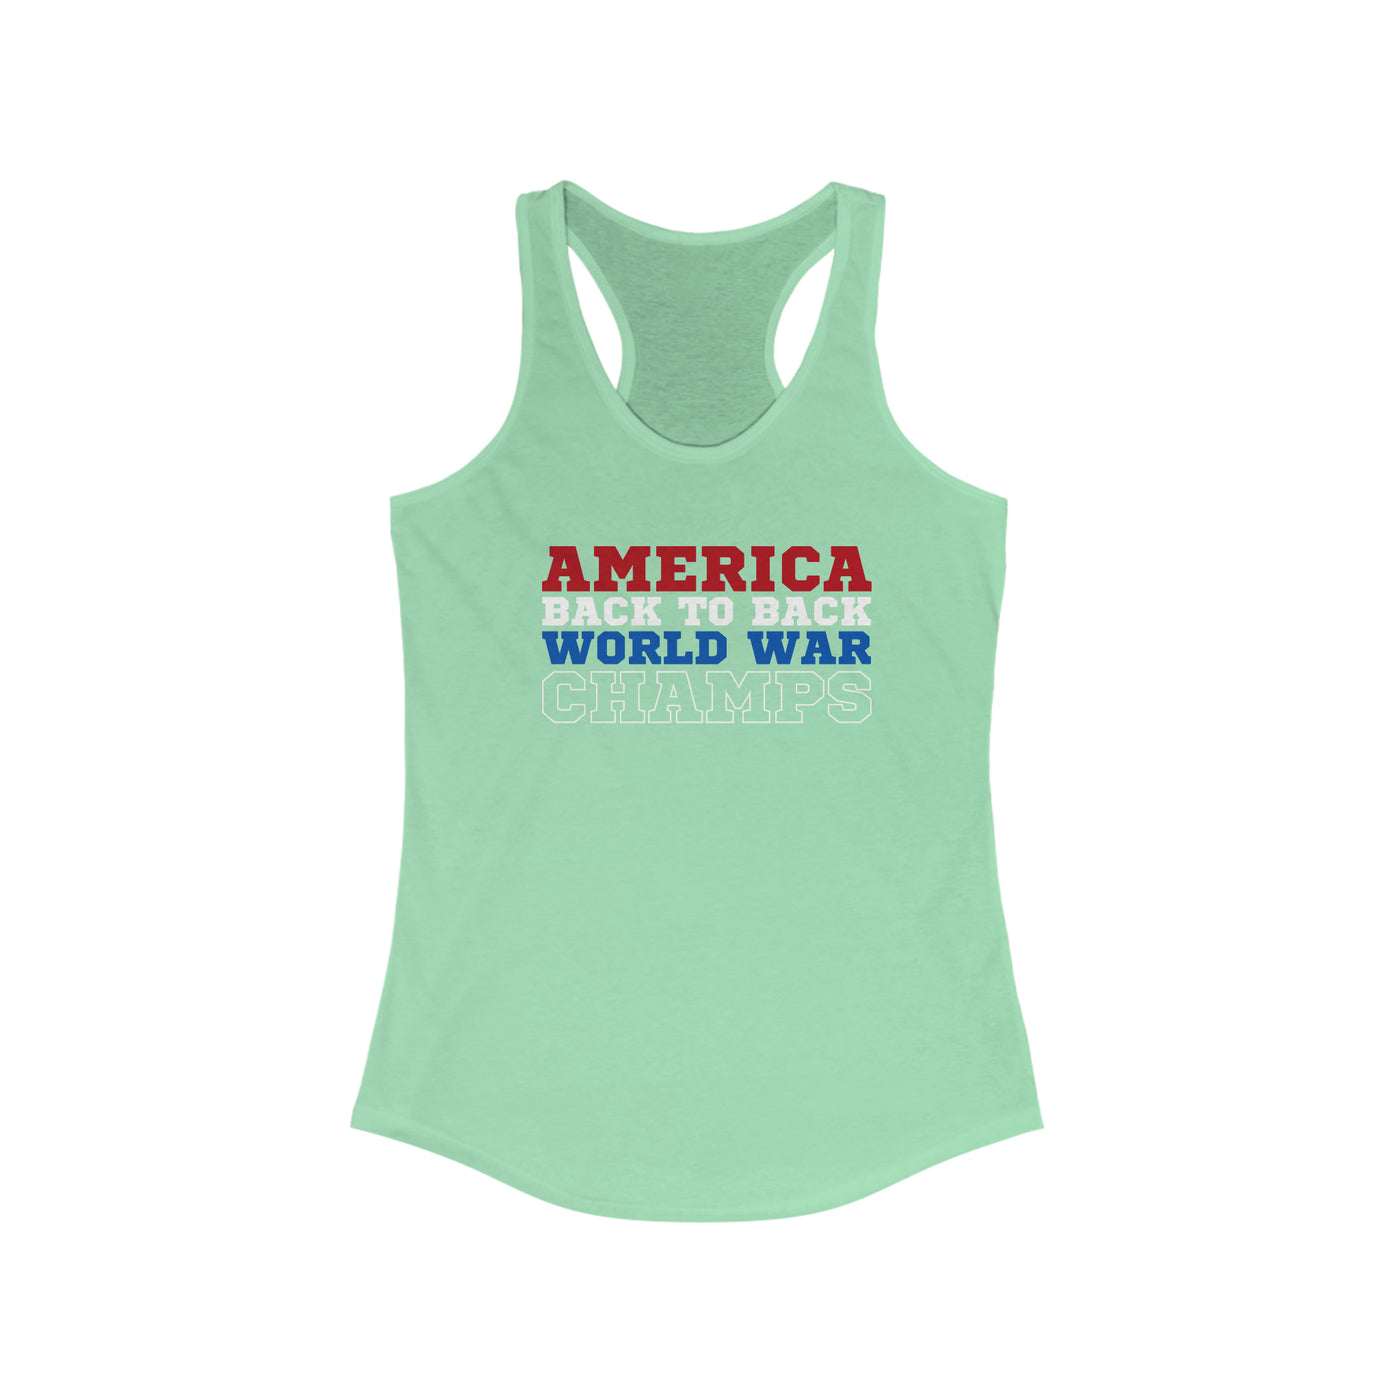 America Back To Back World War Champs Women's Racerback Tank